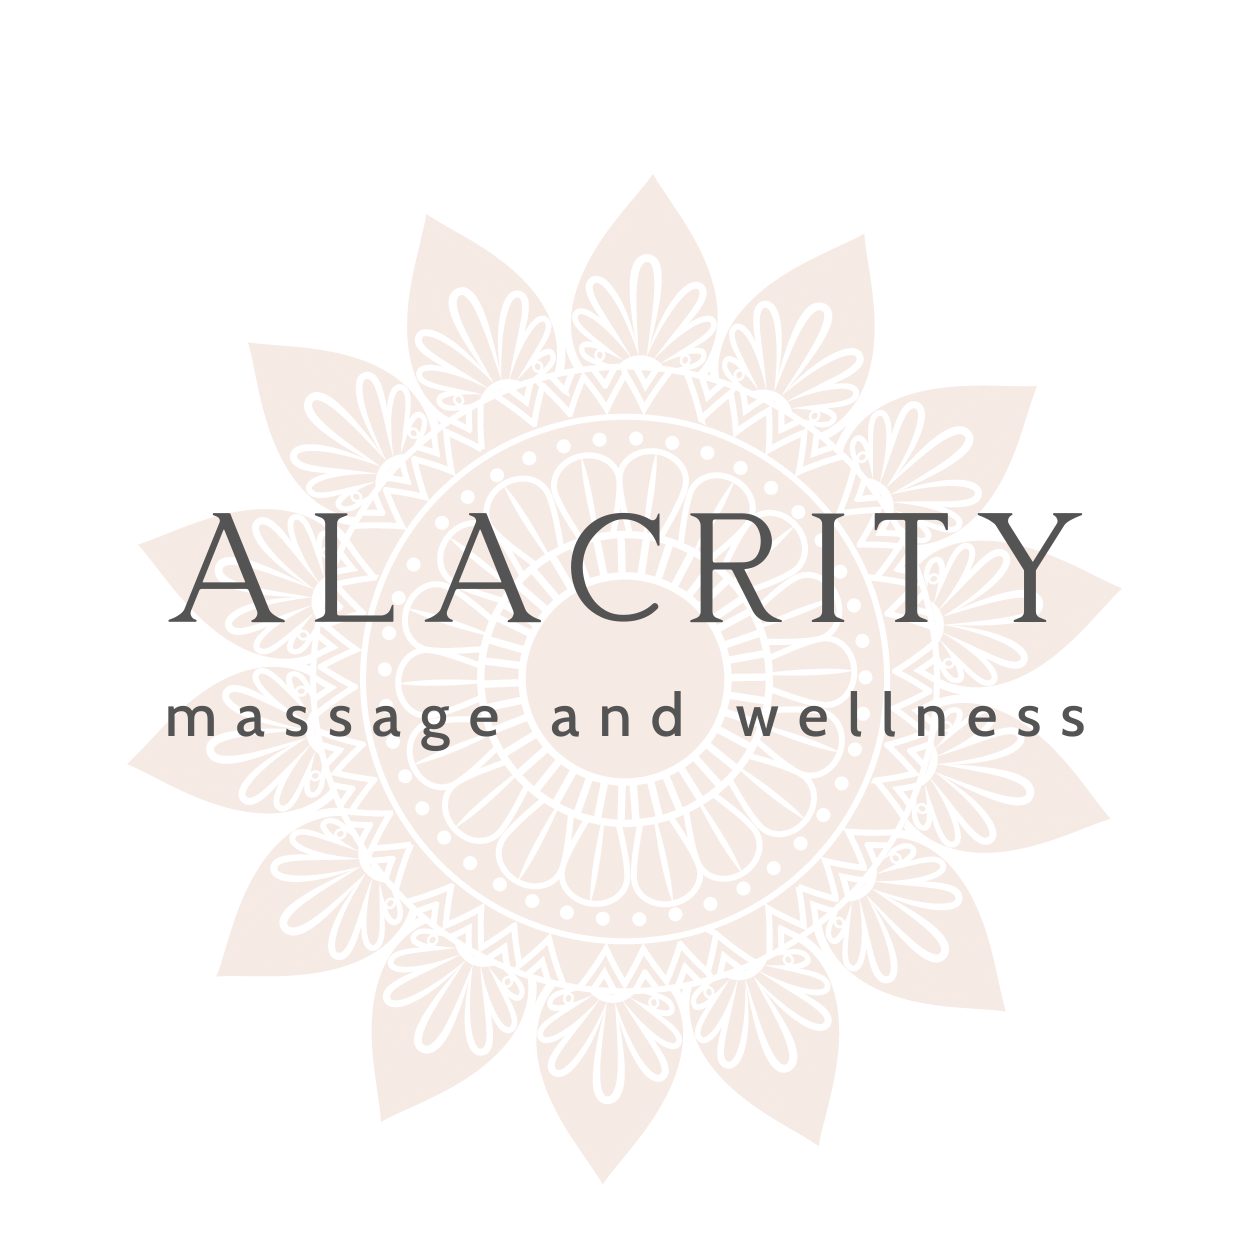 Alacrity Massage and Wellness